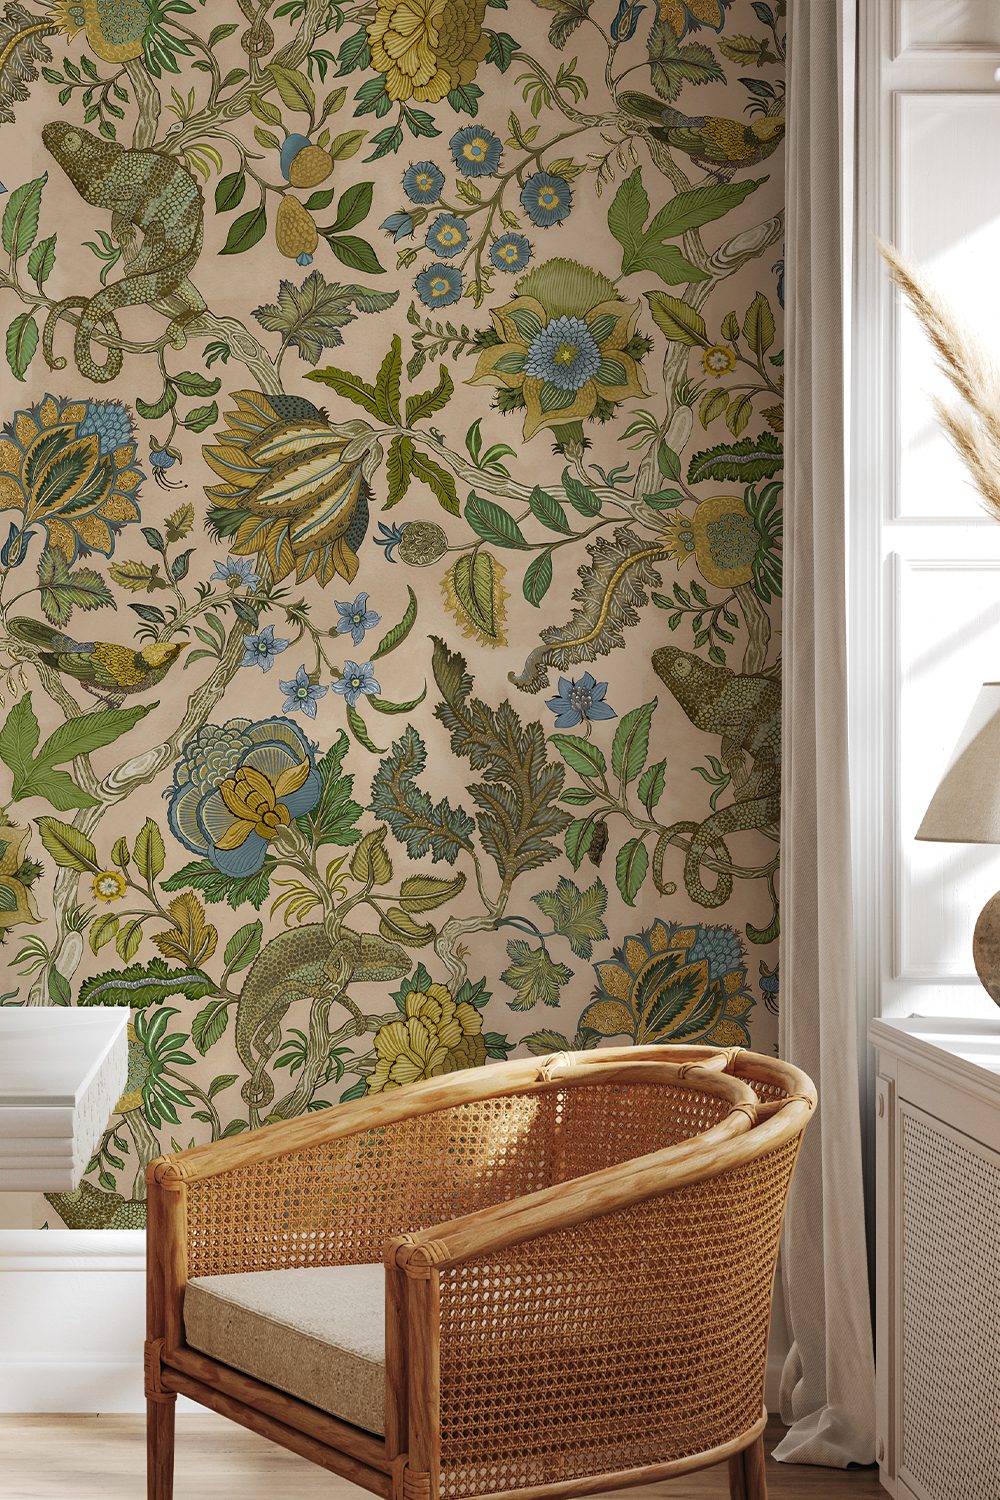 Josephine-munsey-wallpapers-interiors-chameleon-trail-floral-green-plaster-pink-light-blue-wallpaper-dining-room